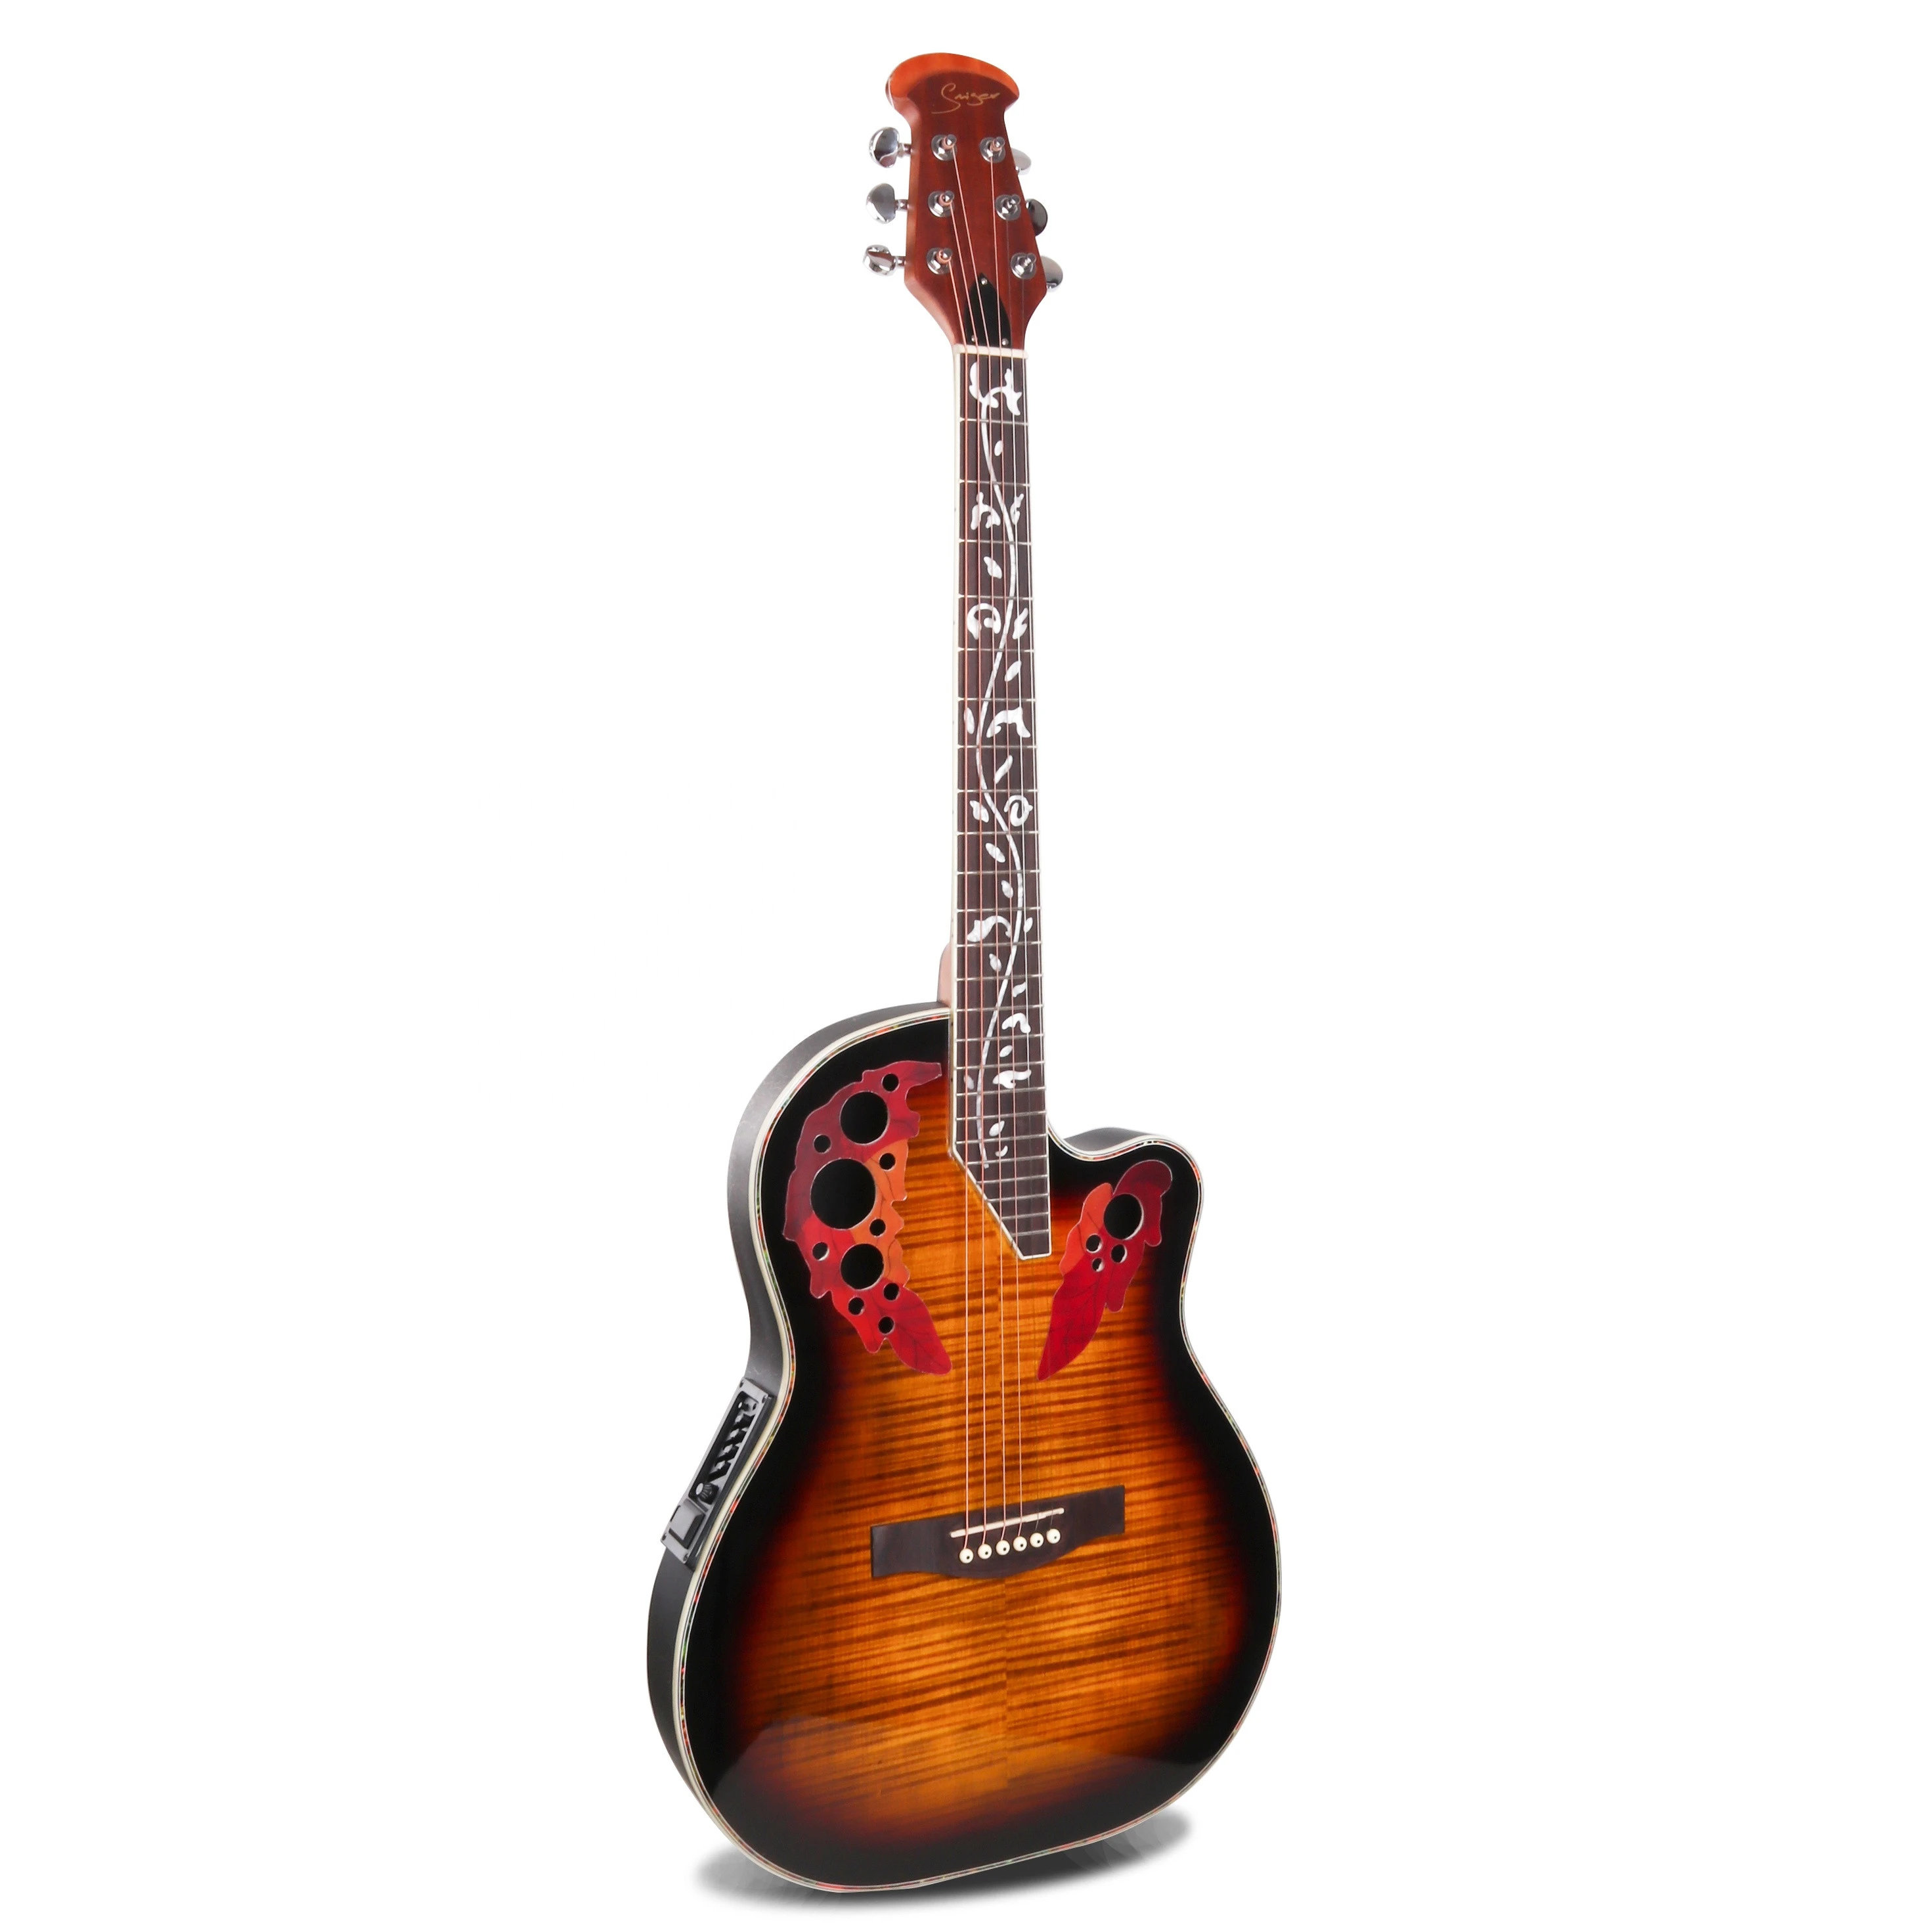 Smiger 41 Inch Electric Acoustic Guitar 1PCS MOQ Ovation Guitar Semi Electric Acoustic Guitar With 4-band pickup